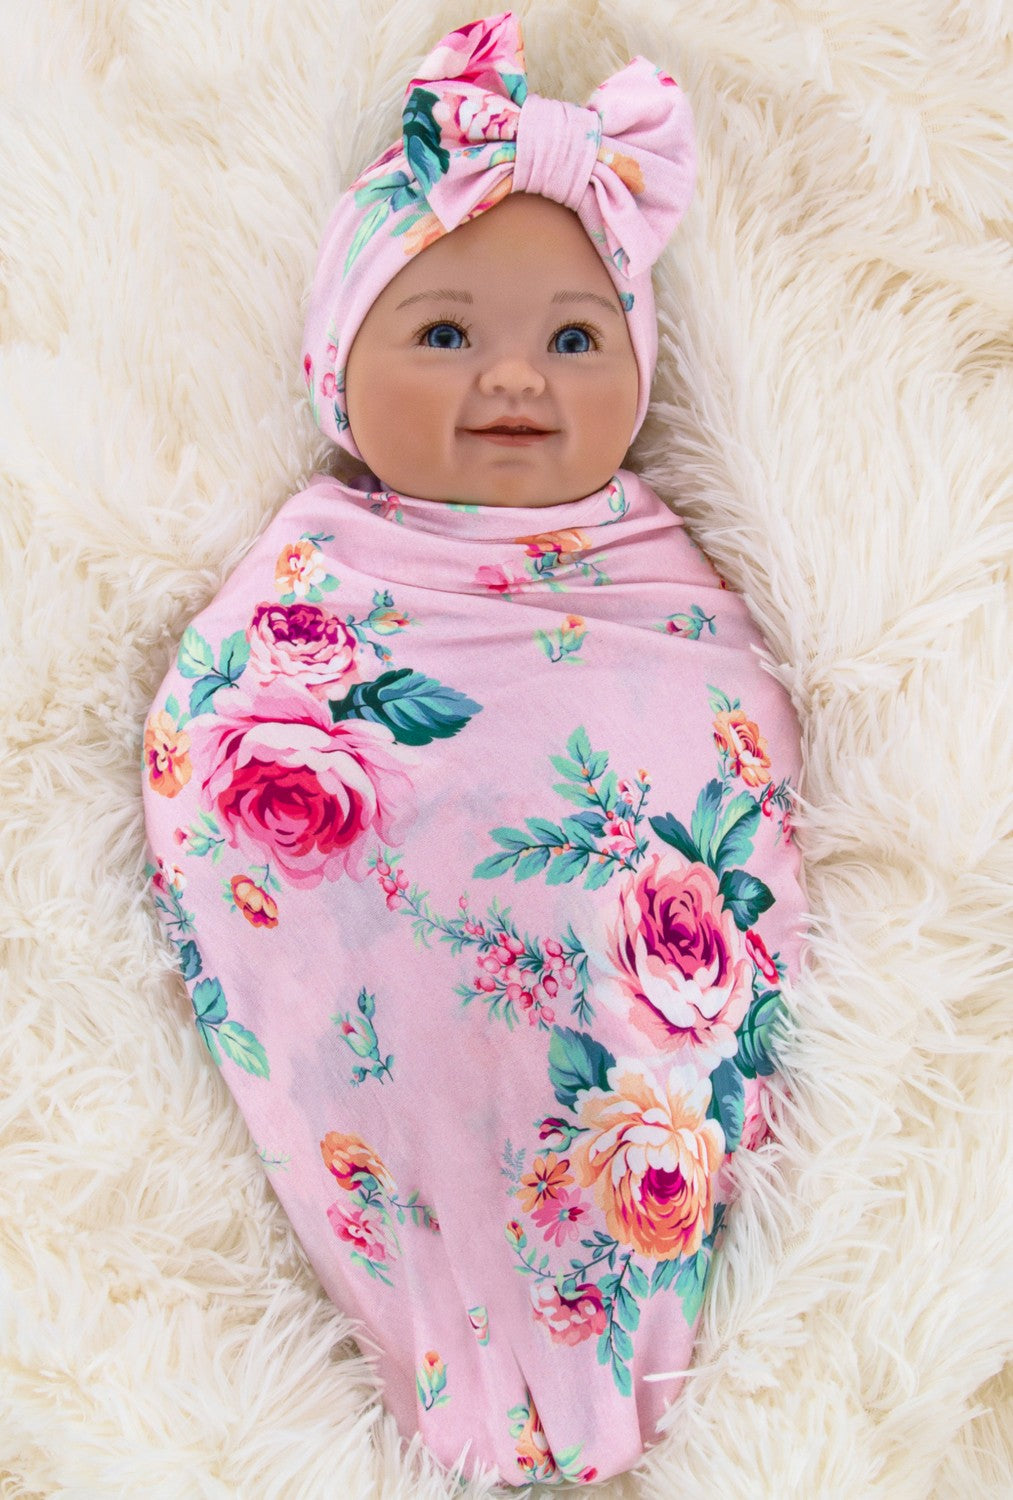 Newborn Accessories Set - Blanket & Headband